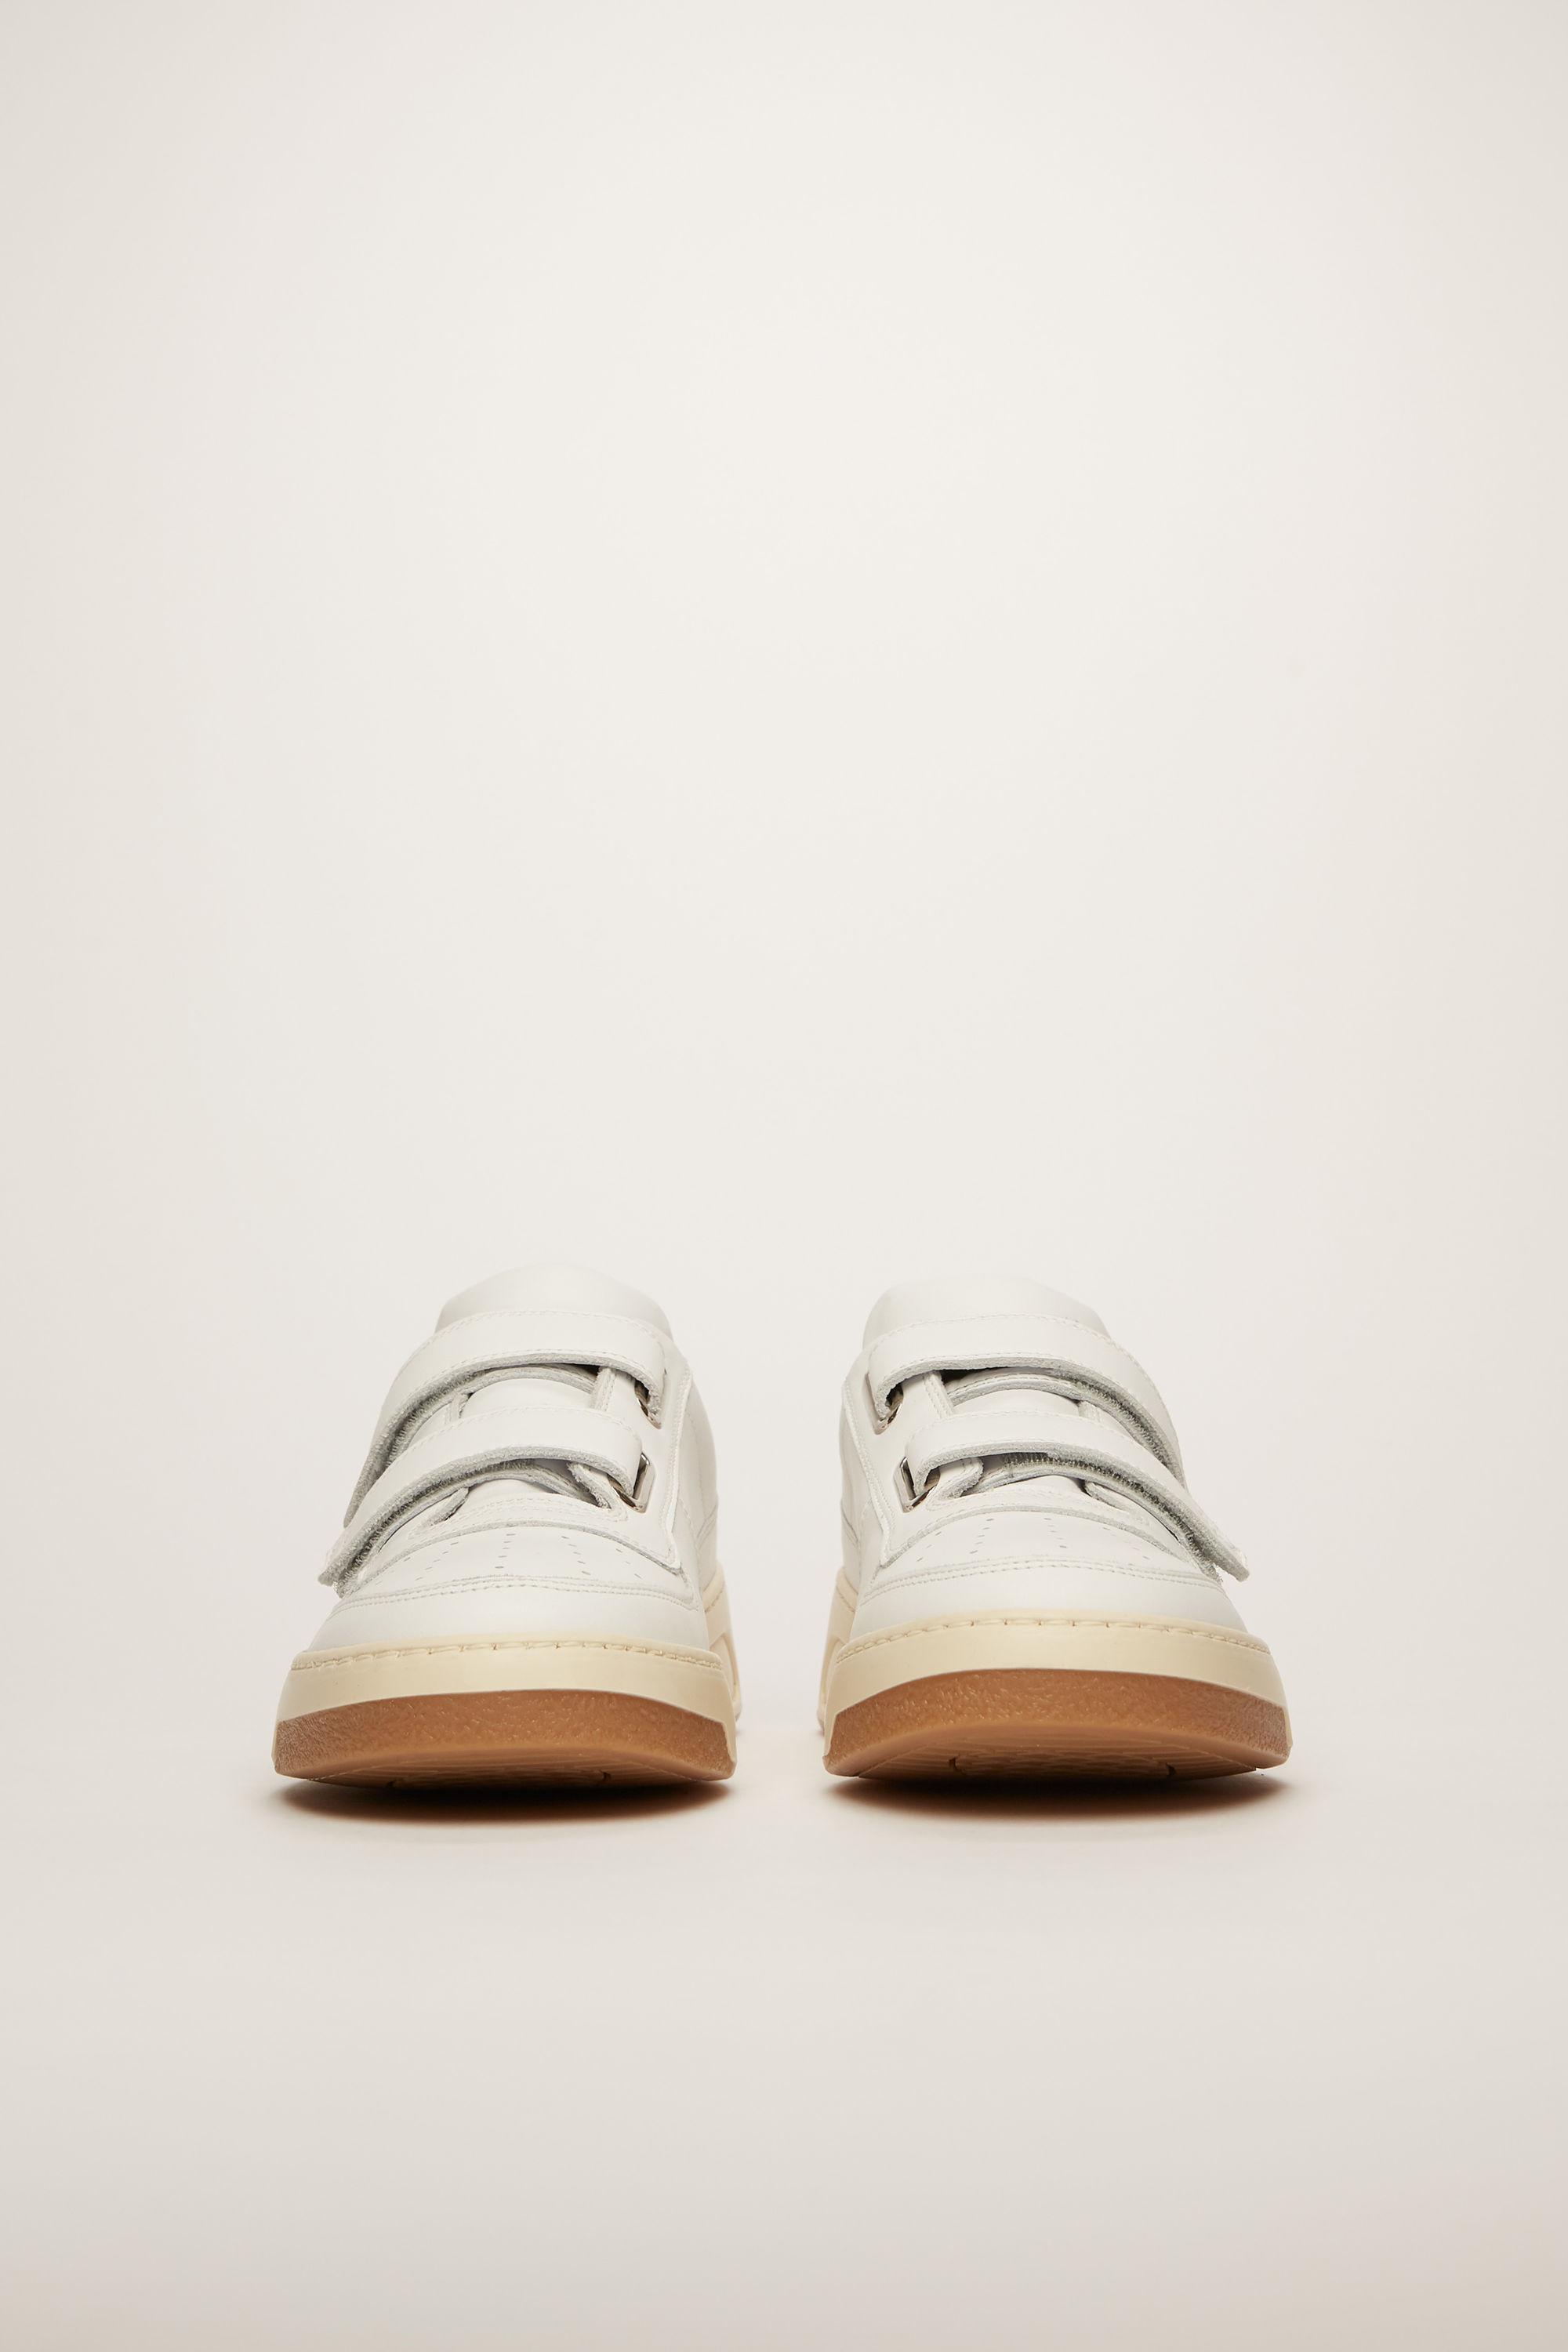 Acne Studios Leather Perey1 White Velcro-strap Sneakers - Lyst